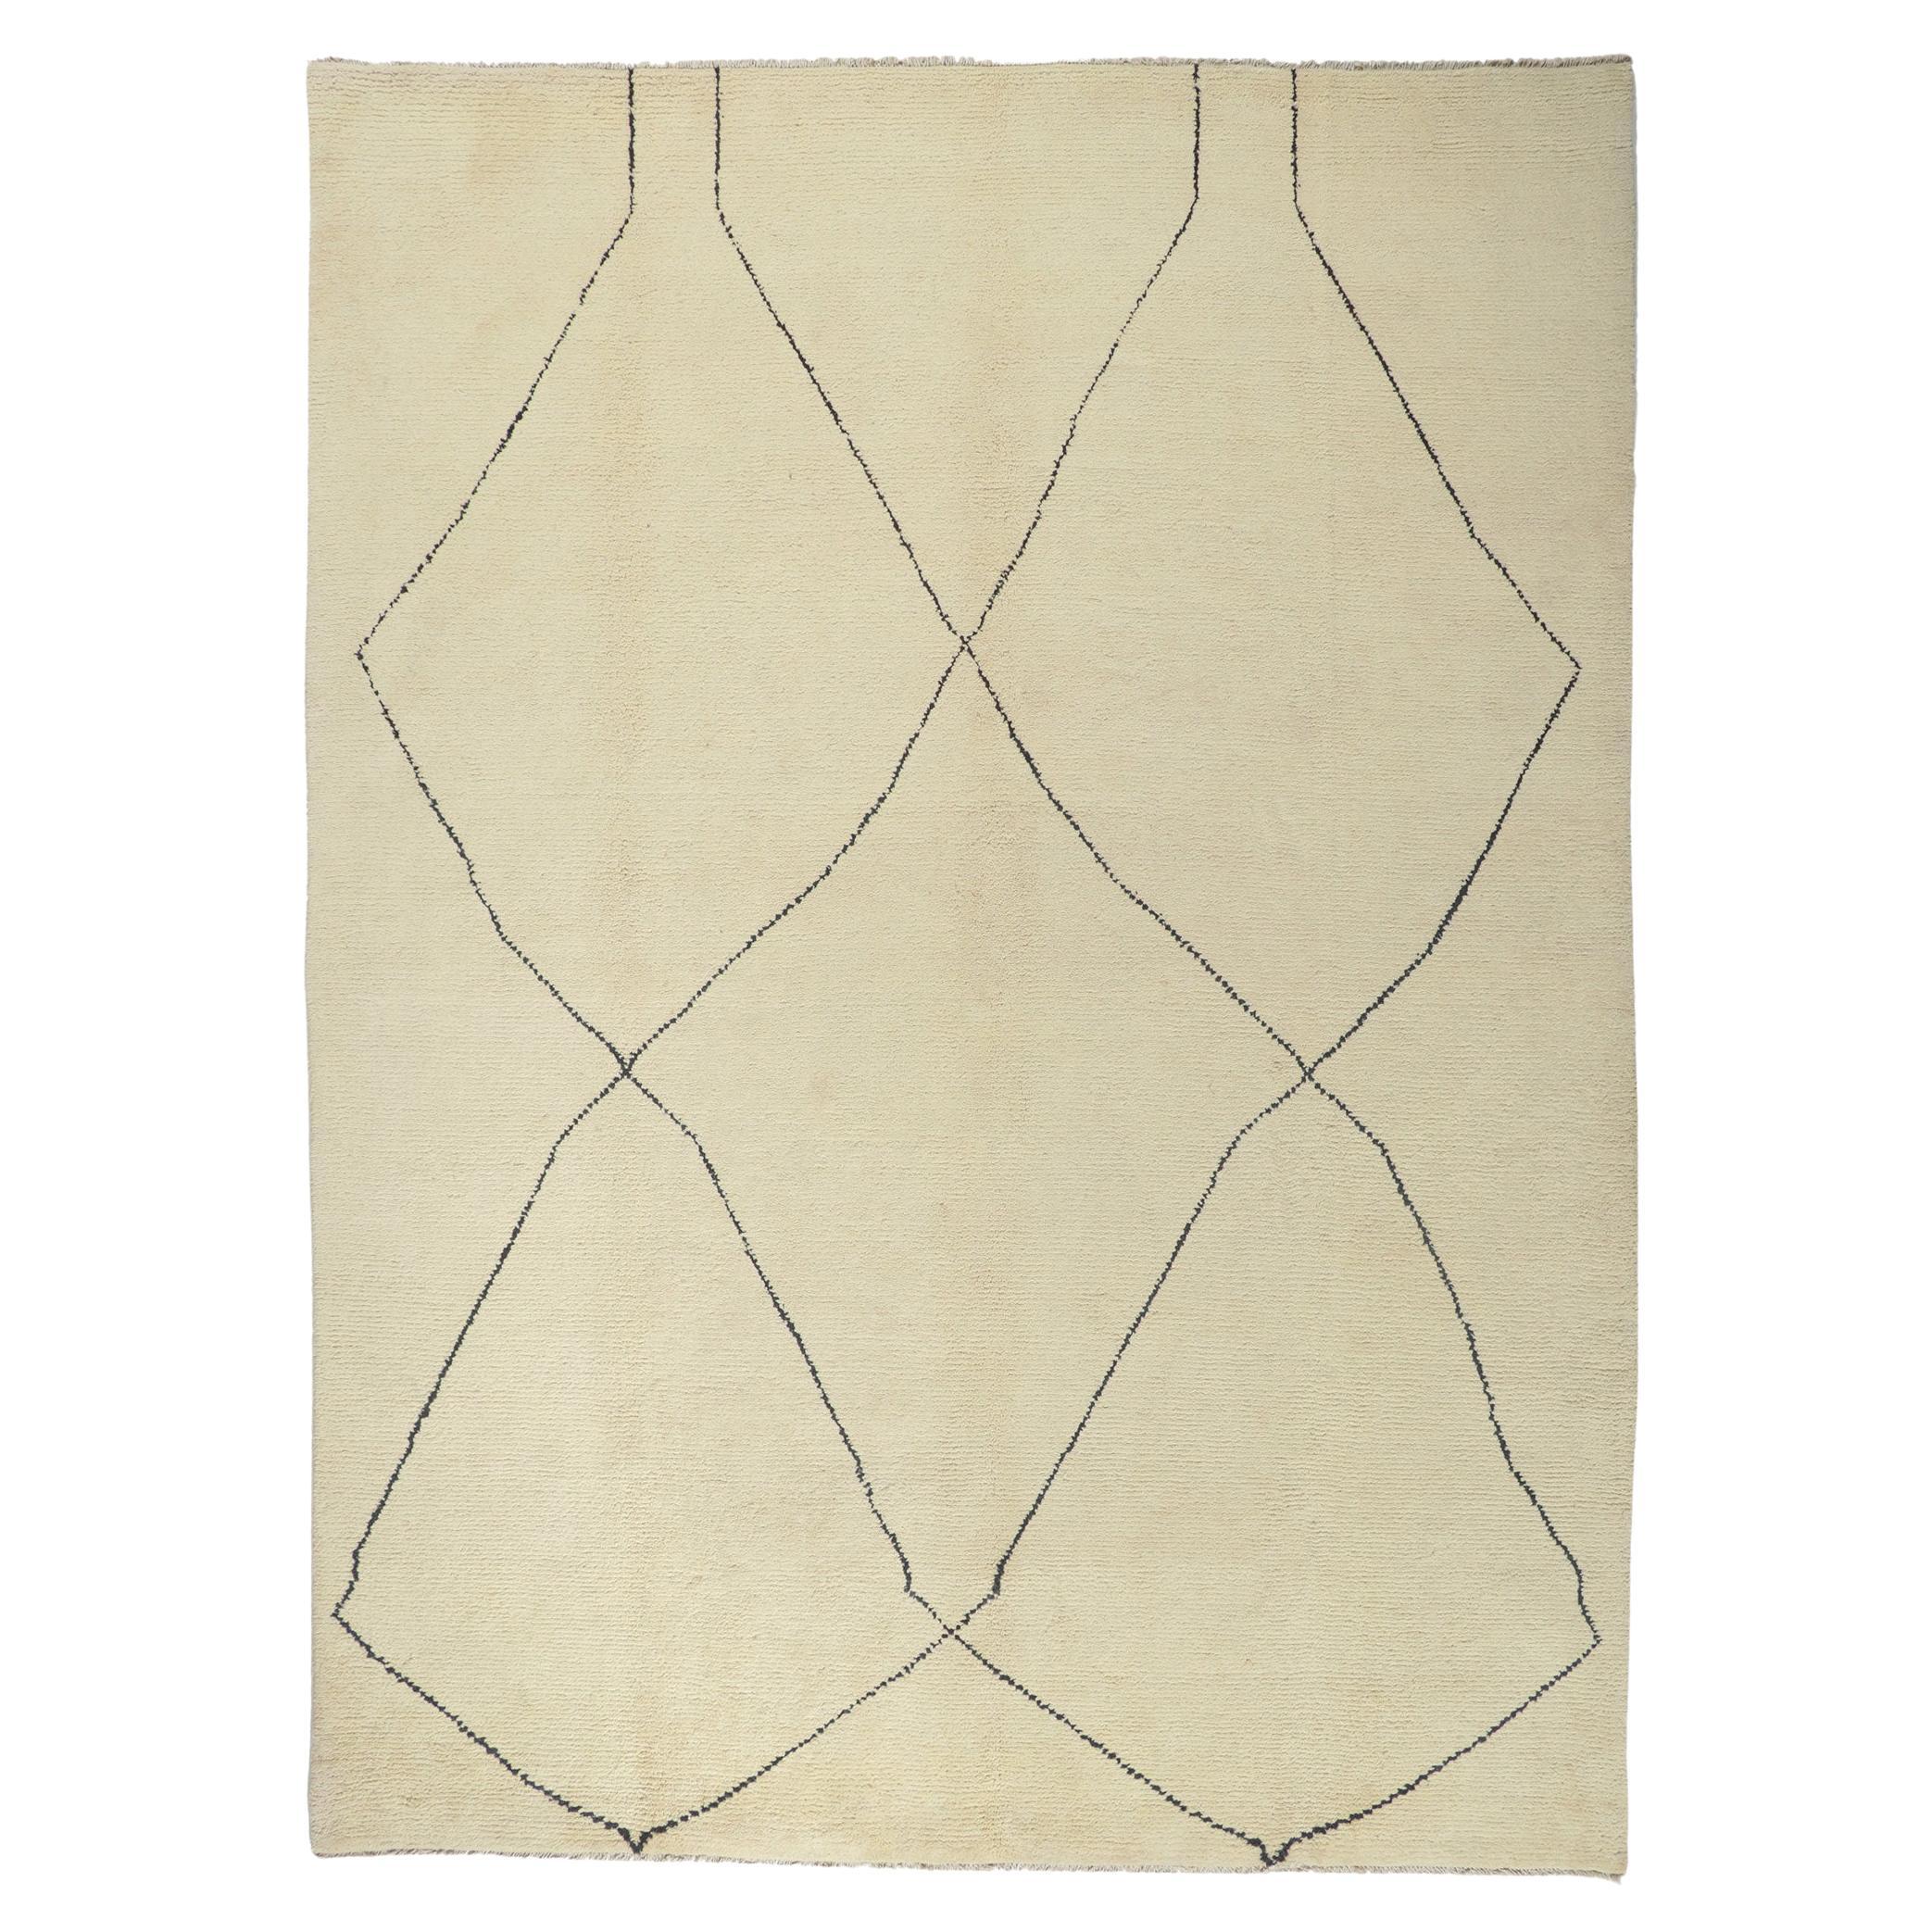 Grand tapis marocain moderne de style minimaliste rencontre le style Boho Chic en vente